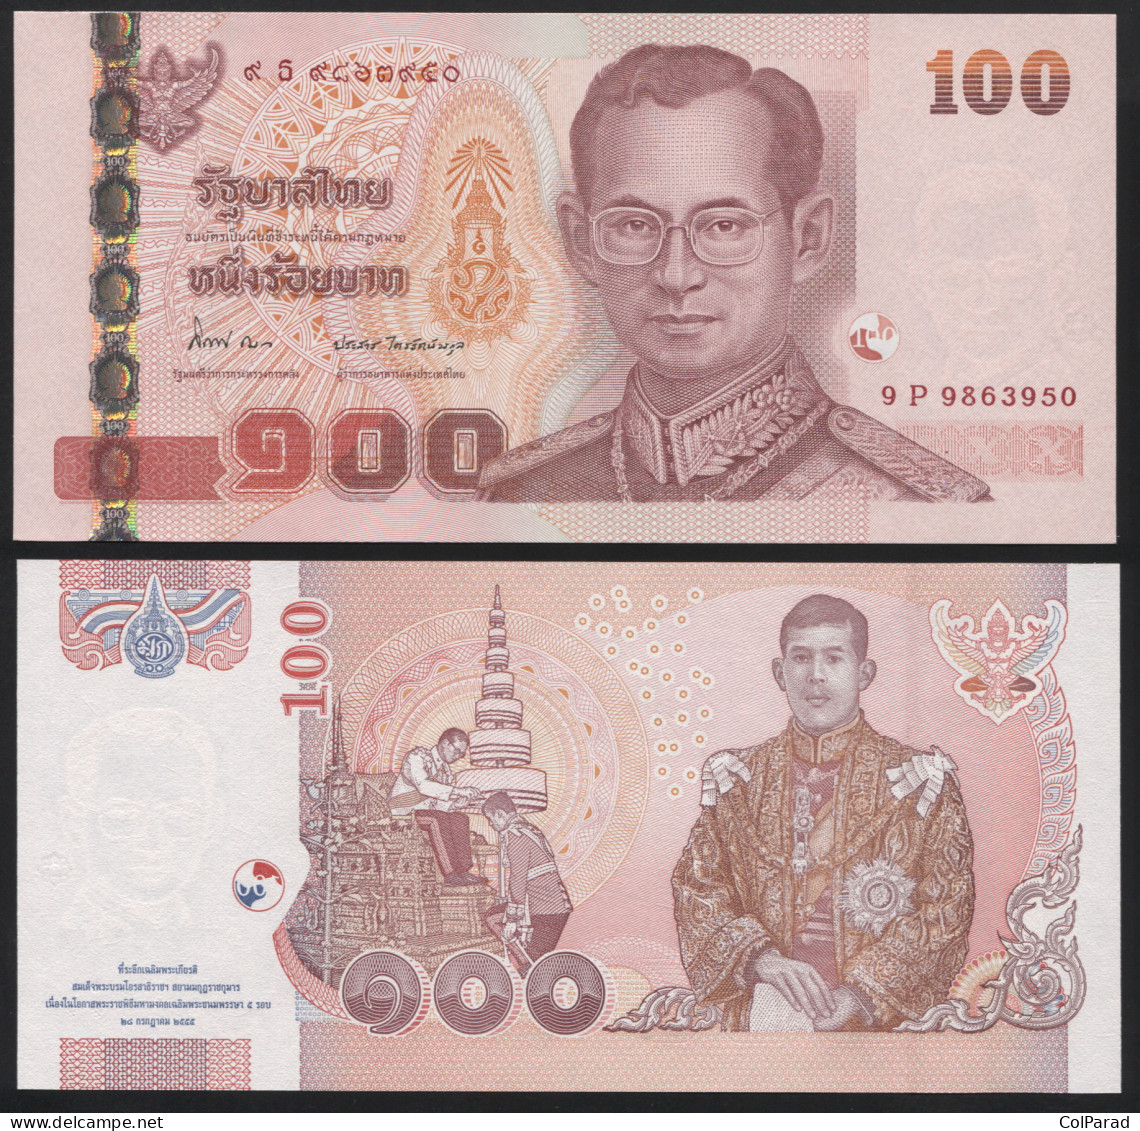 THAILAND 100 BAHT - BE2555 (2012) - Unc - P.126a Paper Banknote - Tailandia